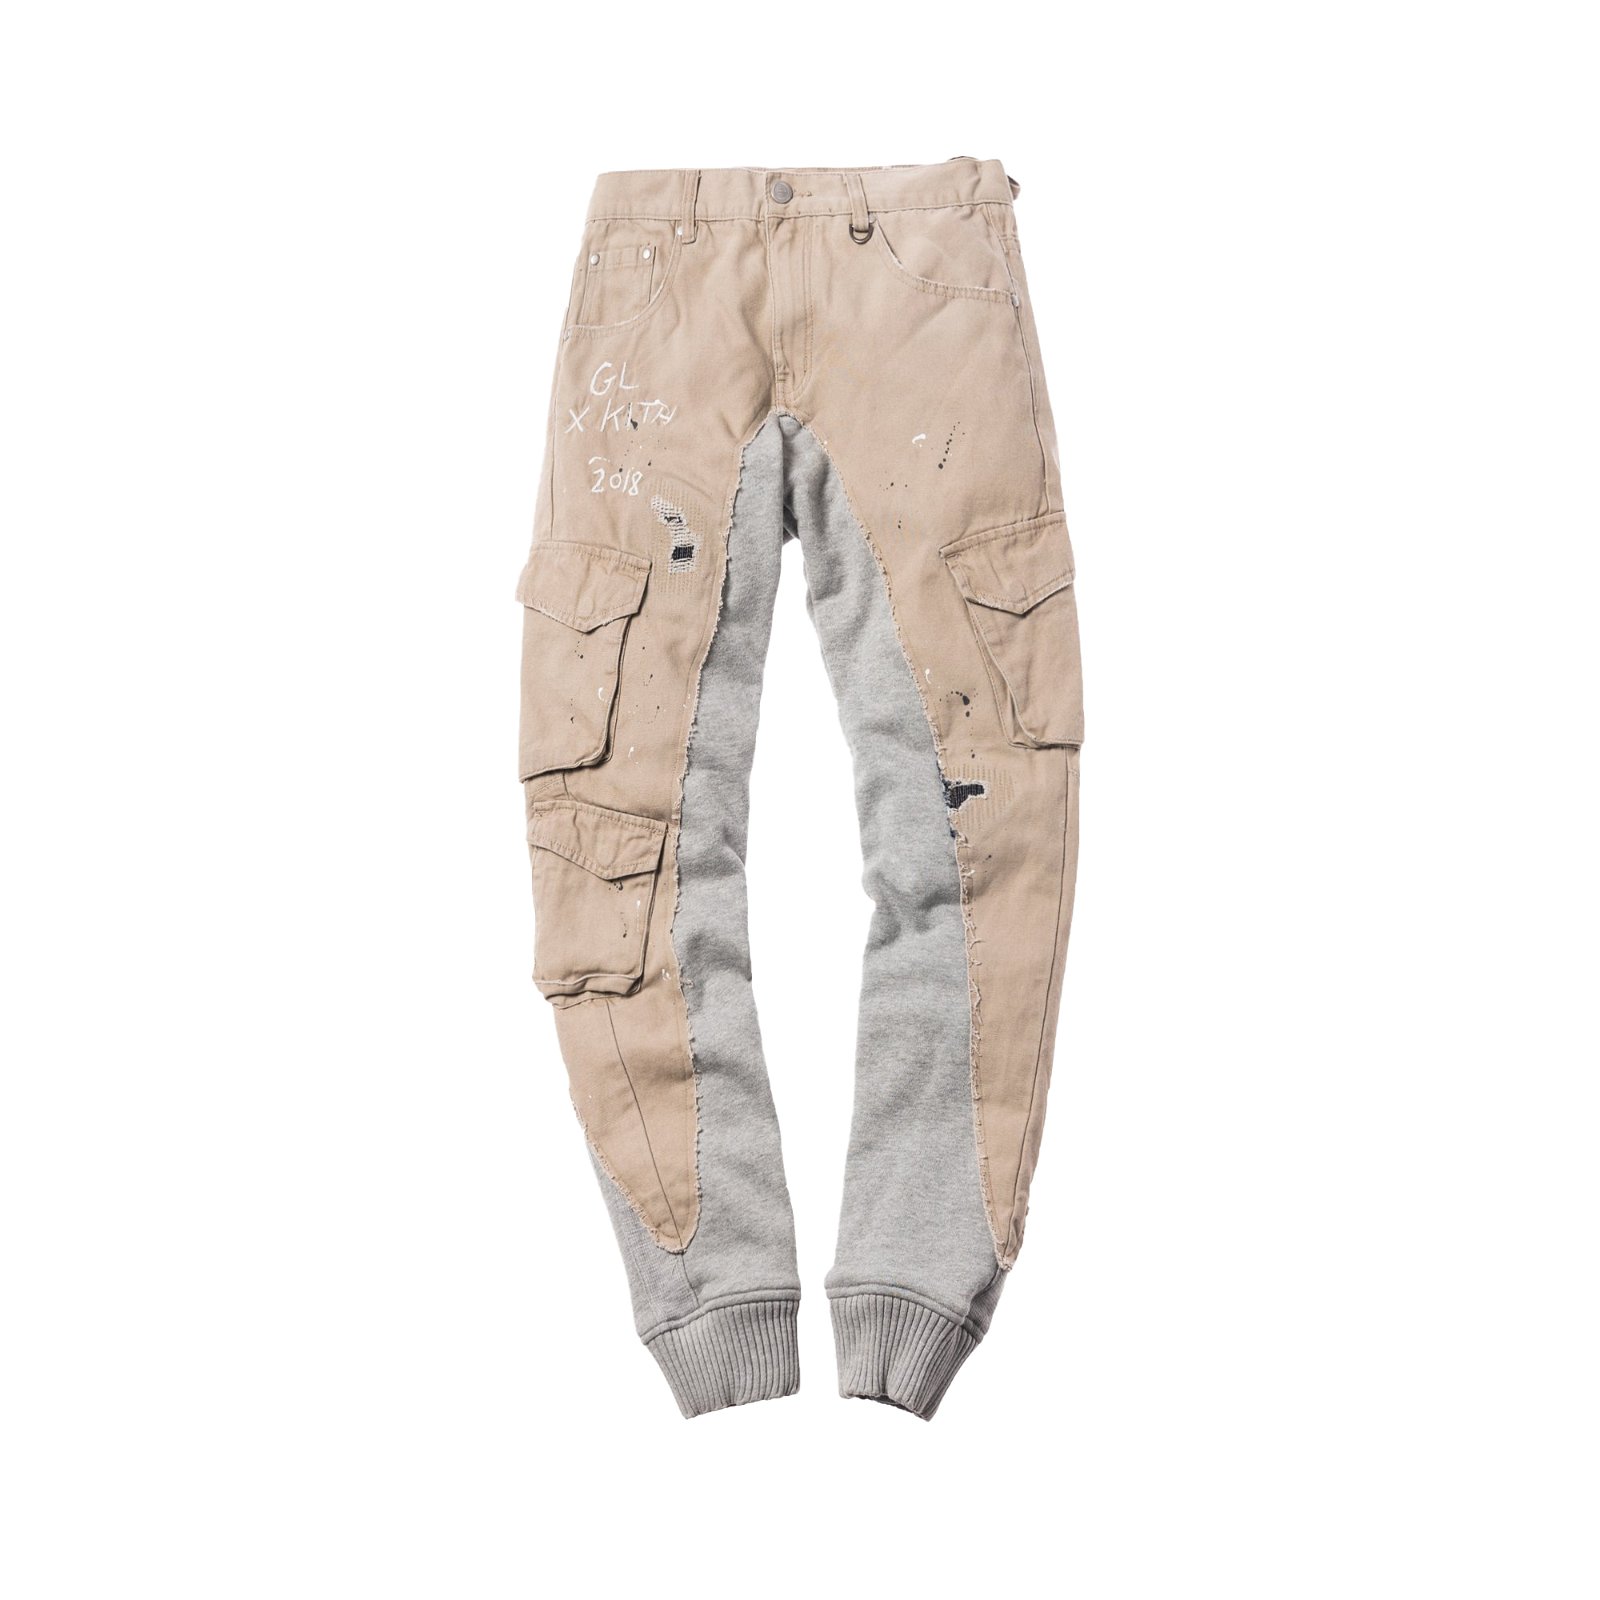 streetwear Kith x Greg Lauren 50/50 Columbus Crago/Fleece Slim Lounge Pant Tan/Grey